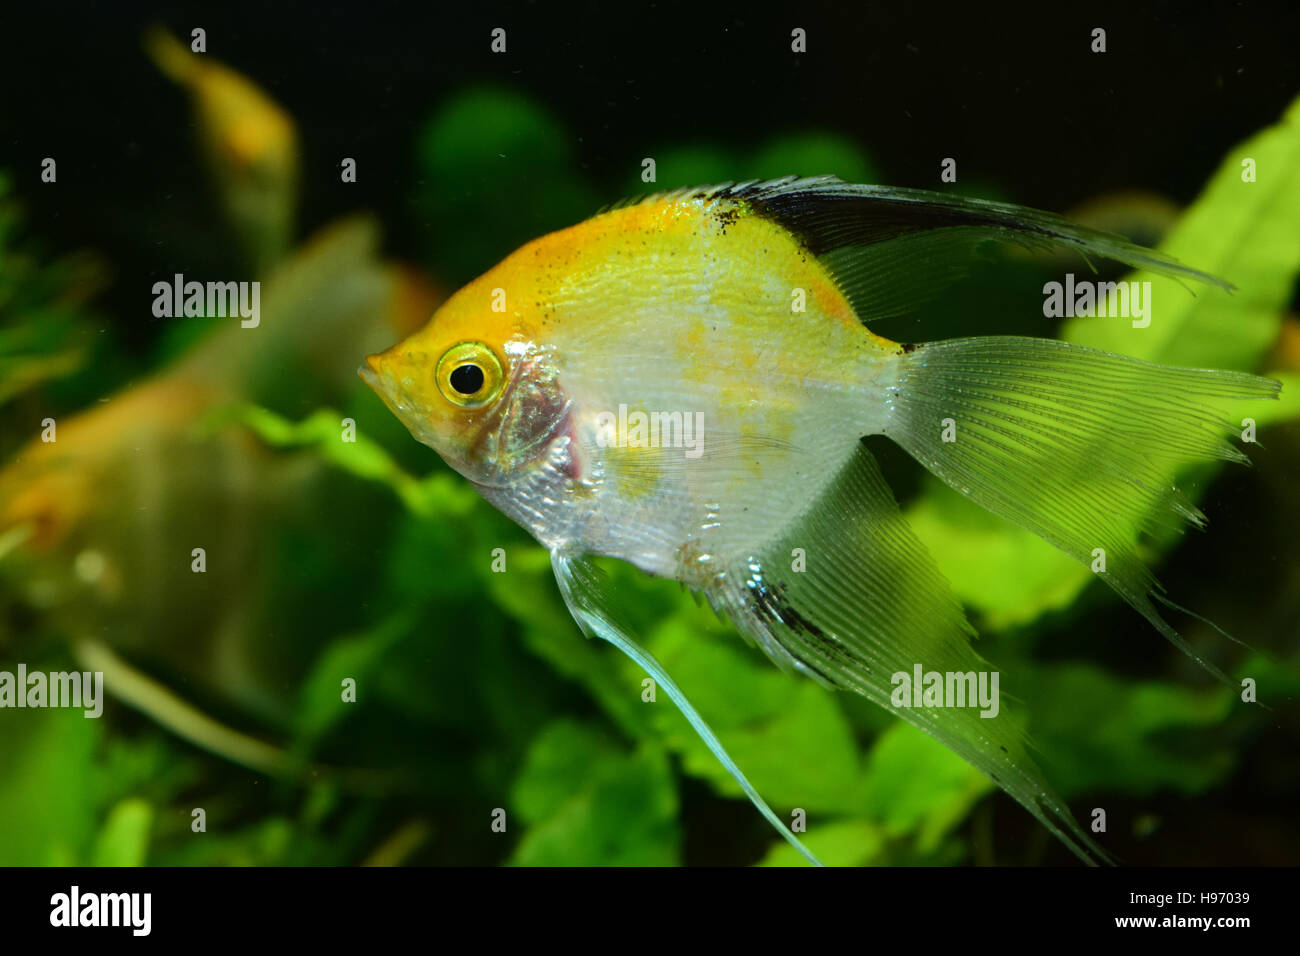 Angelfish aquarium fish Stock Photo